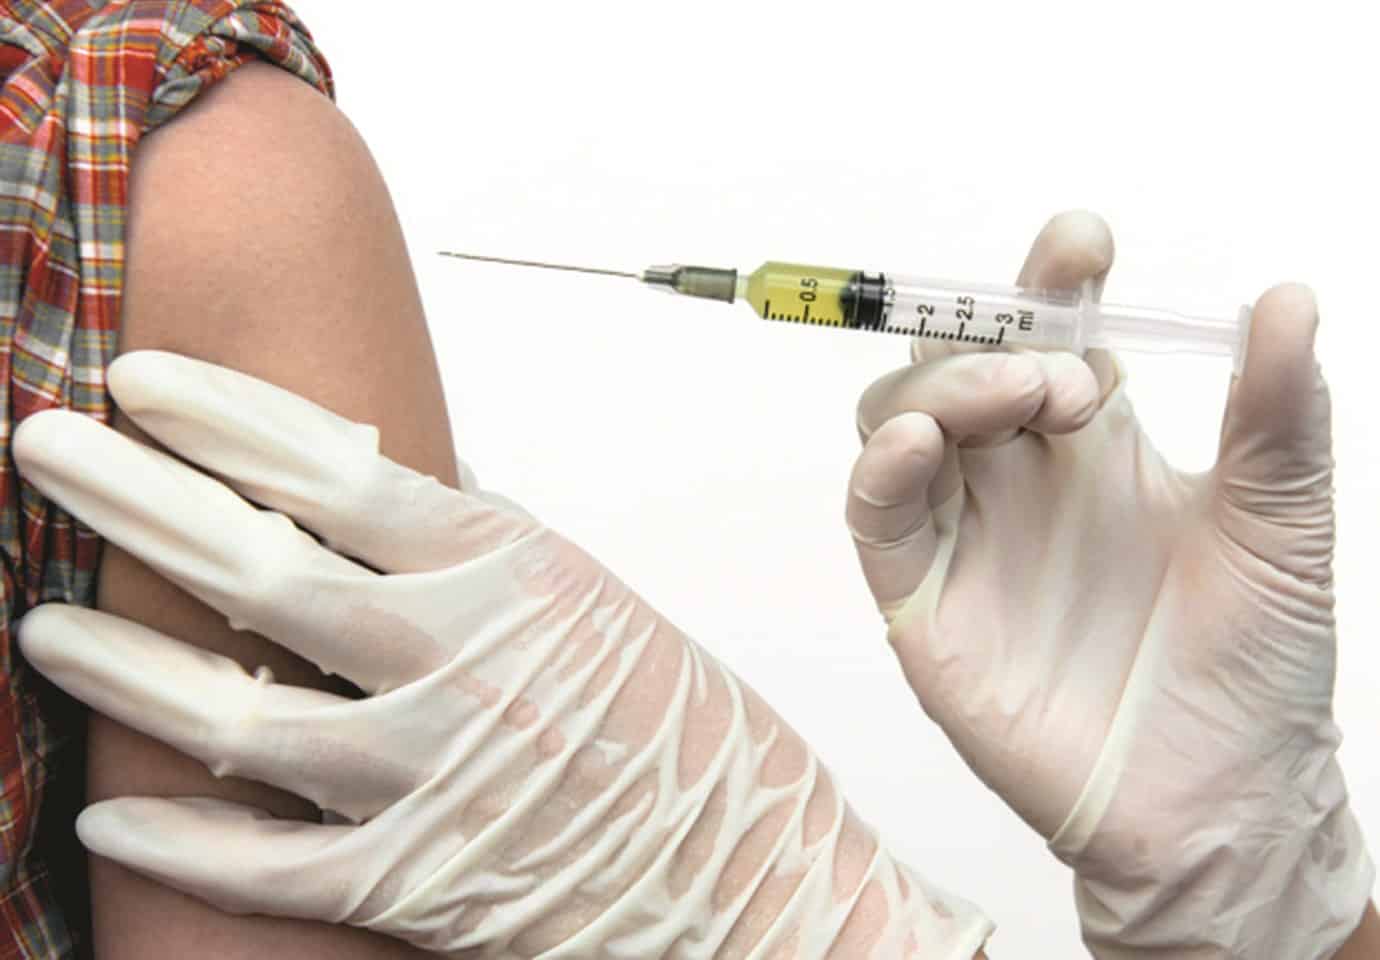 MOPH stresses on vaccinating children against seasonal flu